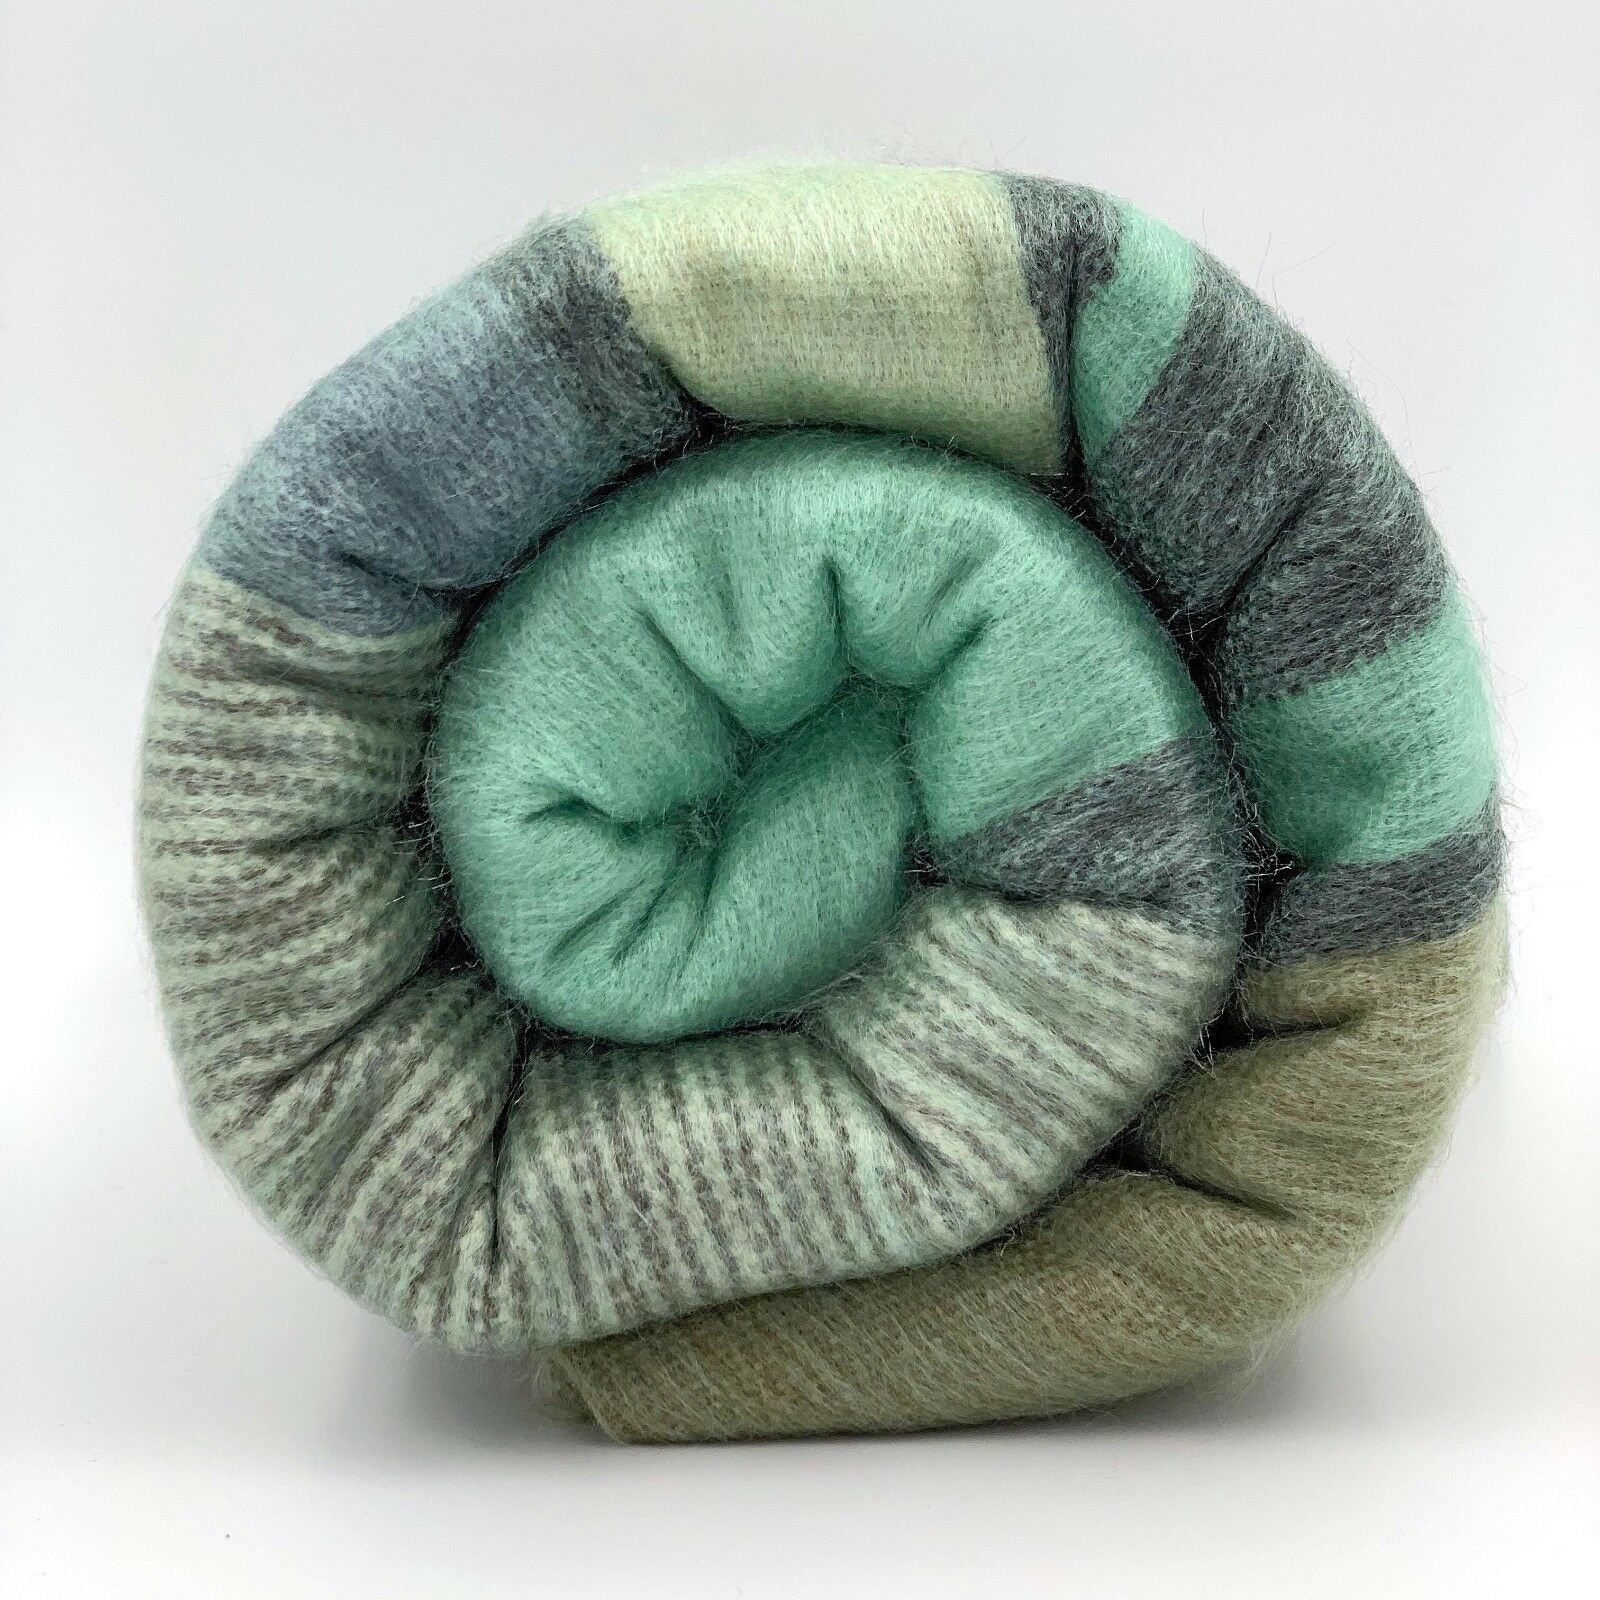 Saquisili - Baby Alpaca Wool Throw Blanket / Sofa Cover - Queen 98" x 65" - Striped Pattern Mixed Aqua/Green